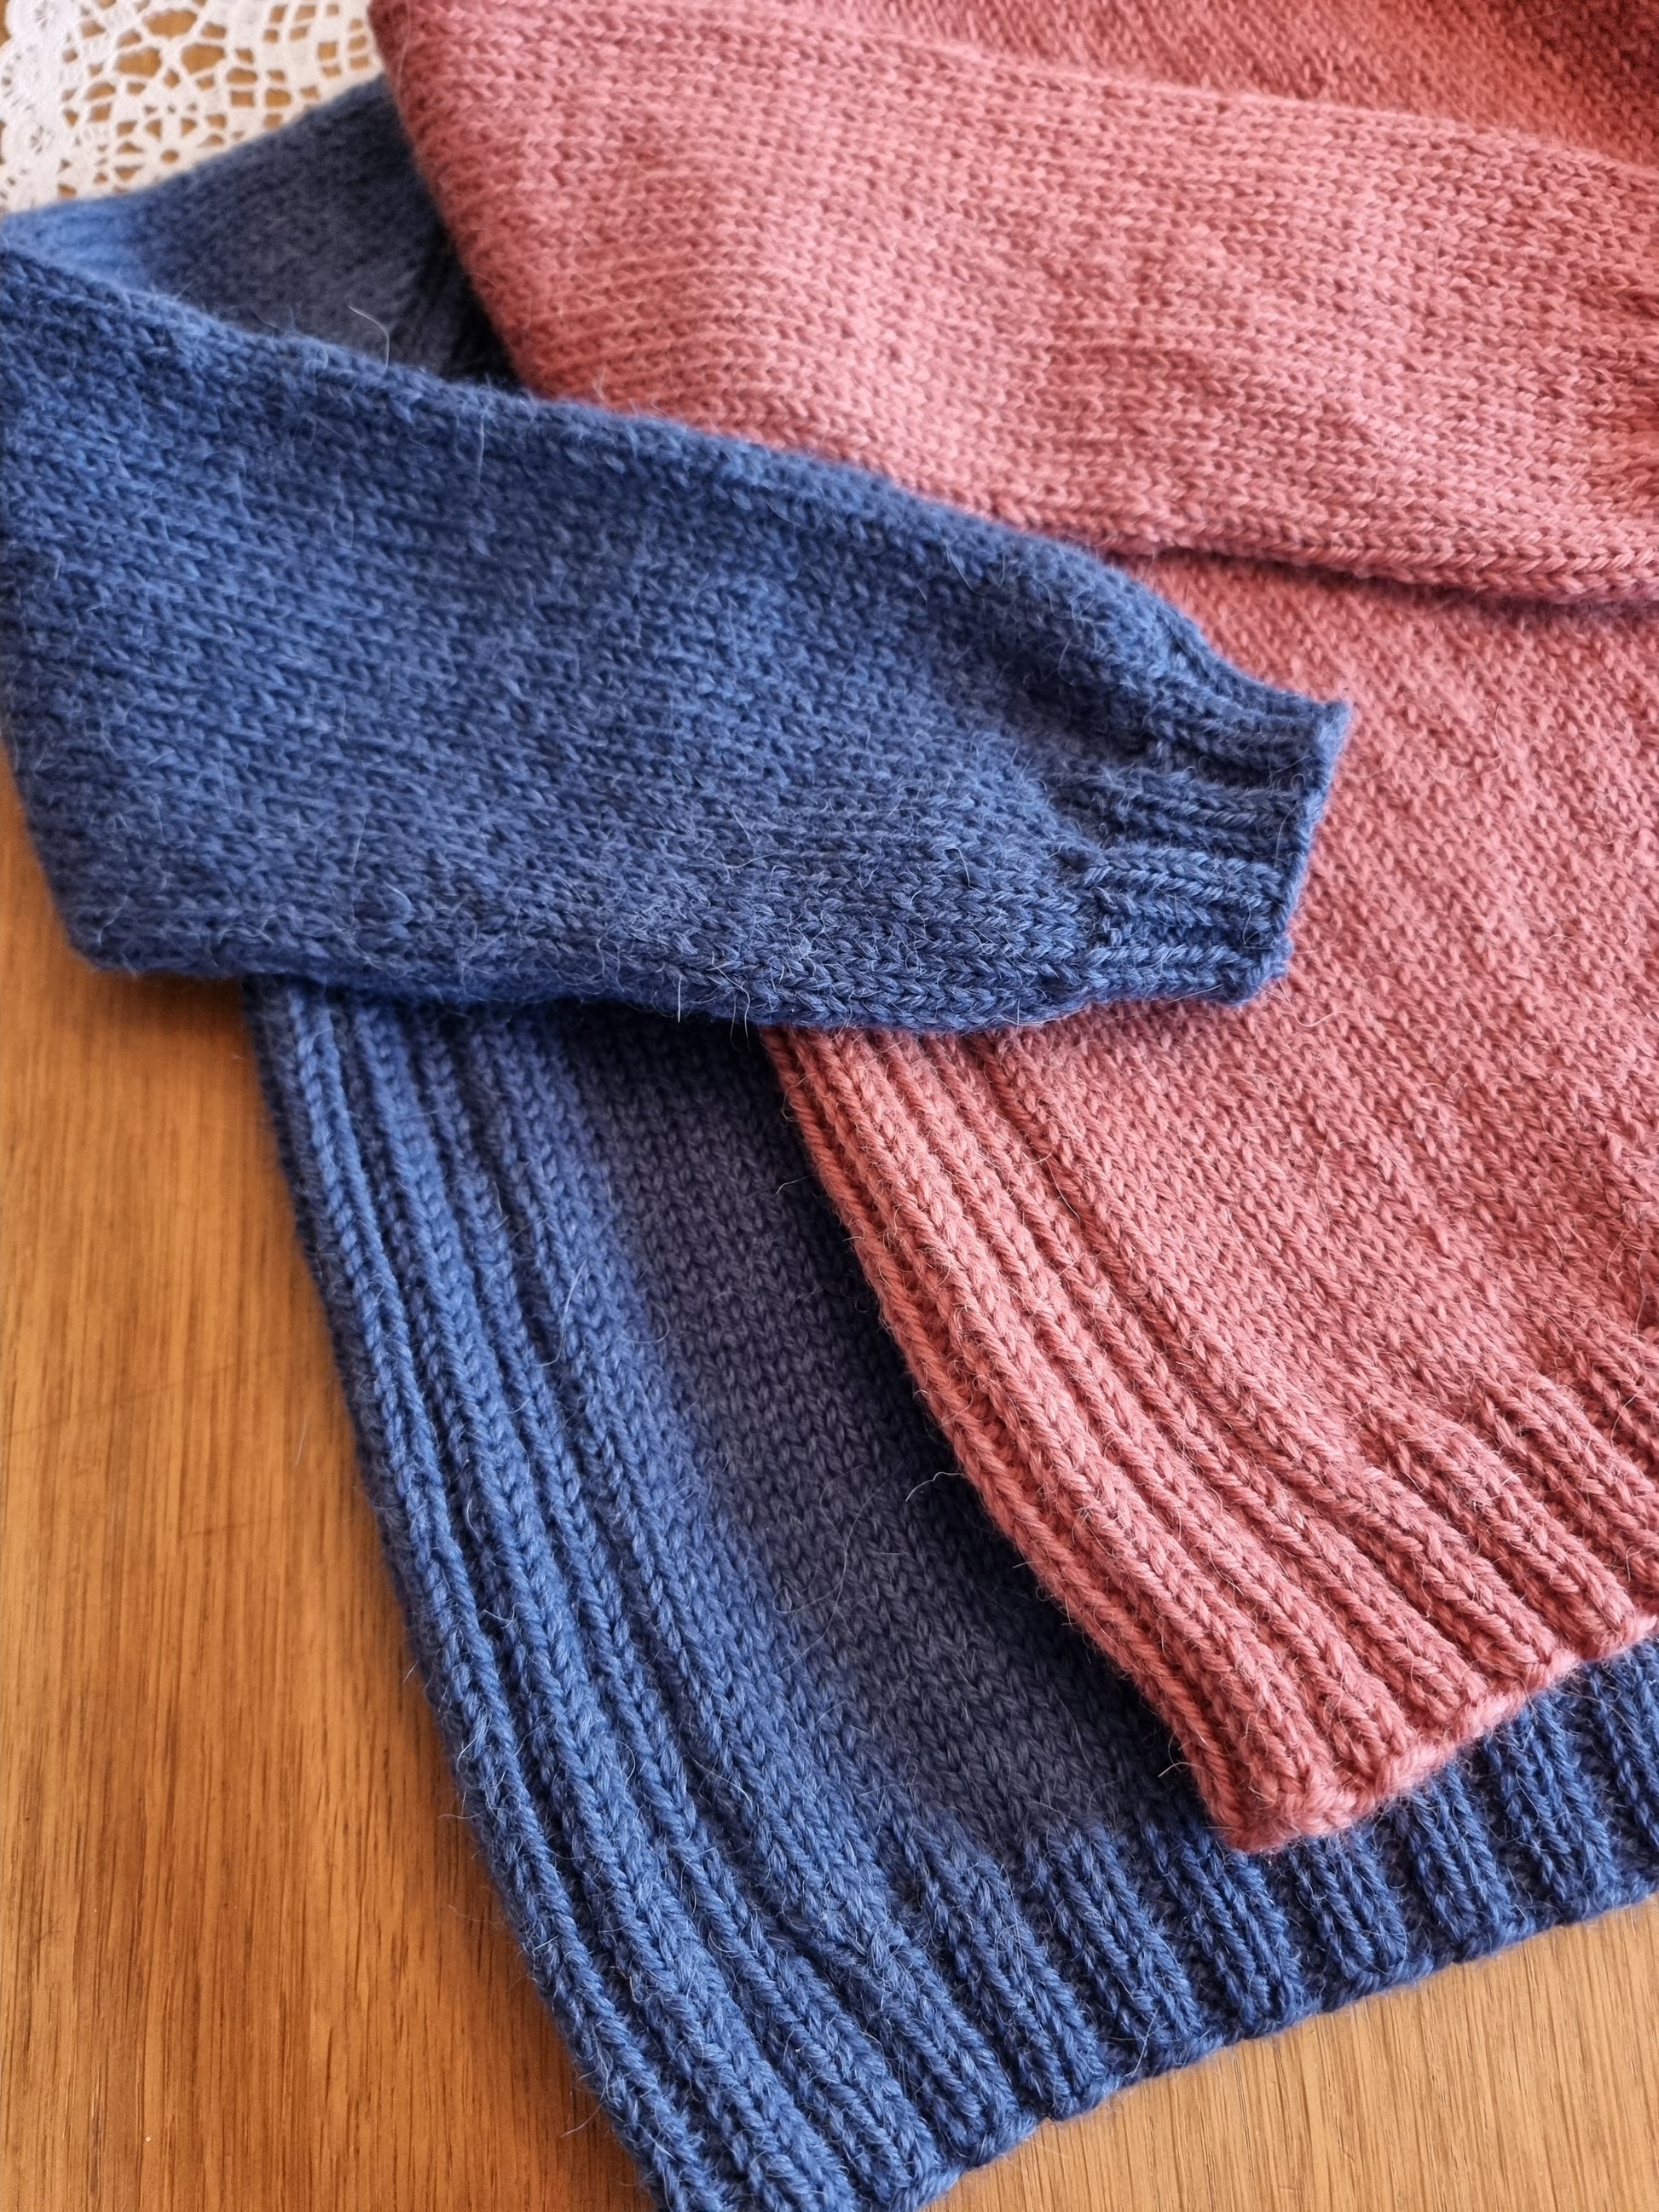 Prjónafjör knitting - Birkir